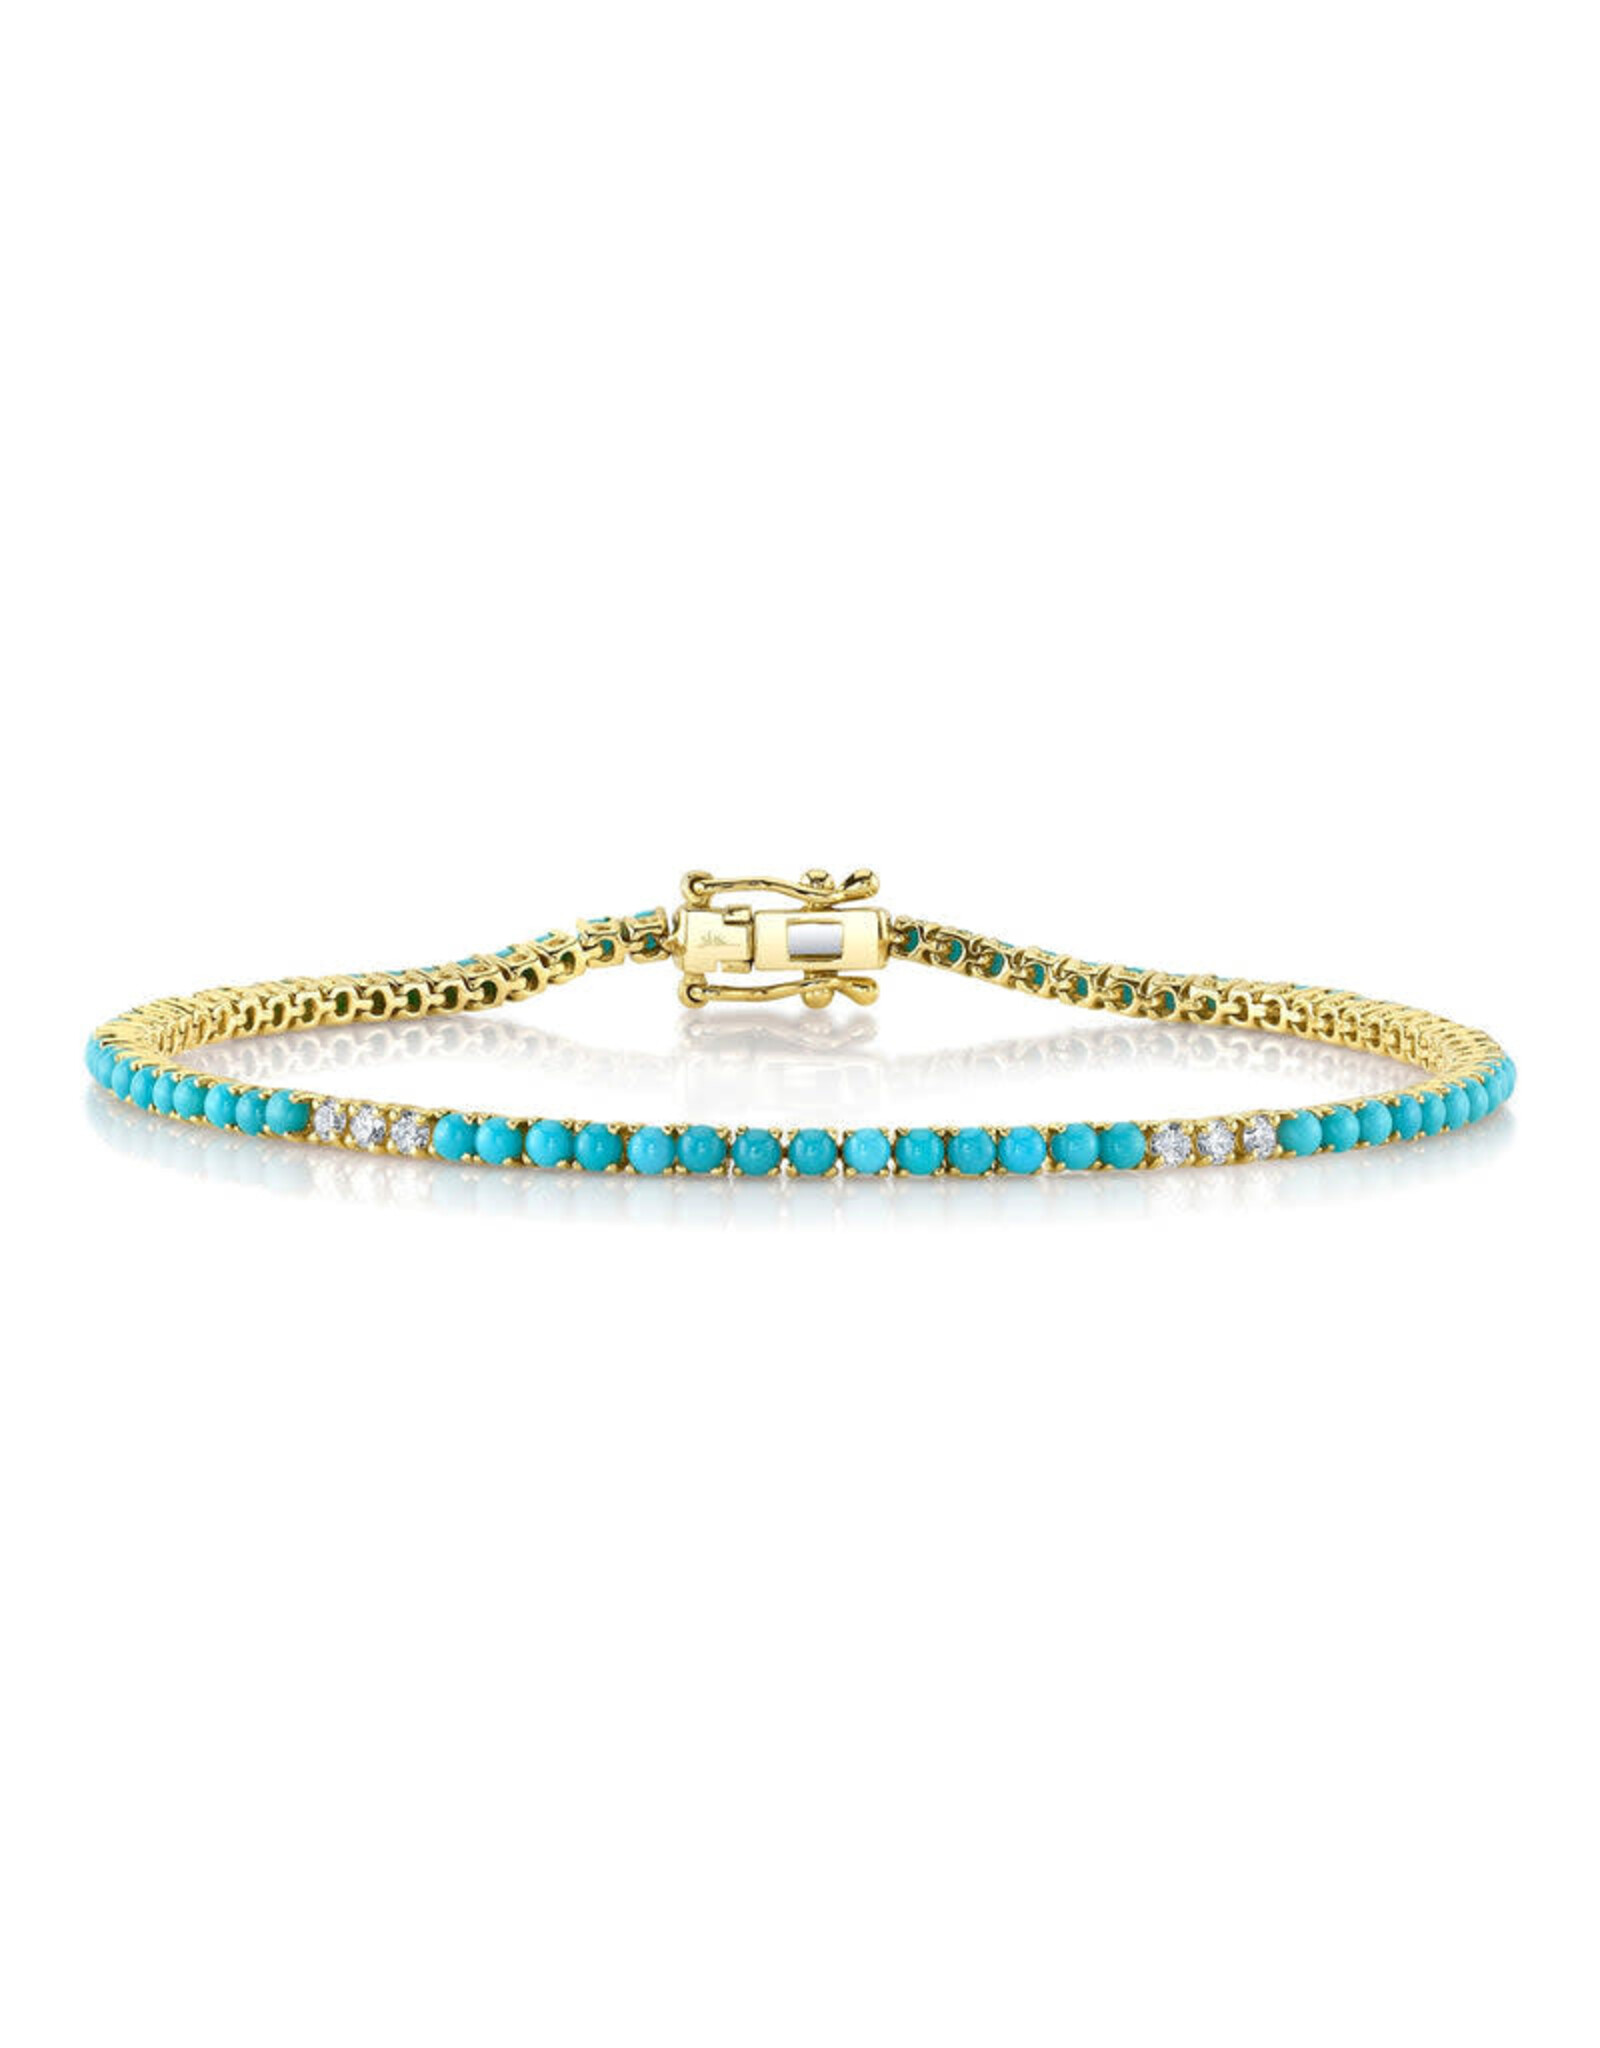 14K Yellow Gold Turquoise & Diamond Tennis Bracelet, T: 2.88ct, D: 0.39ct